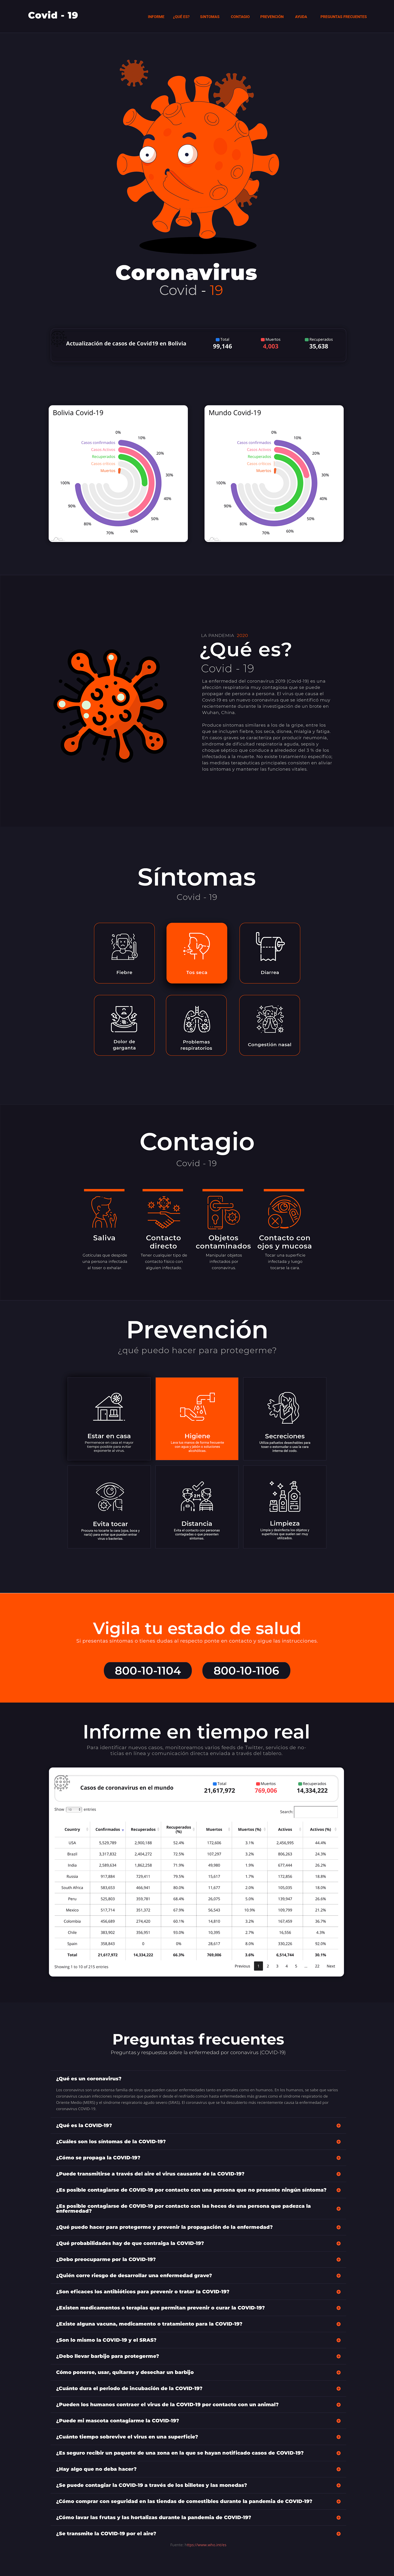 bolivia Coronavirus COVid estadistica infografia